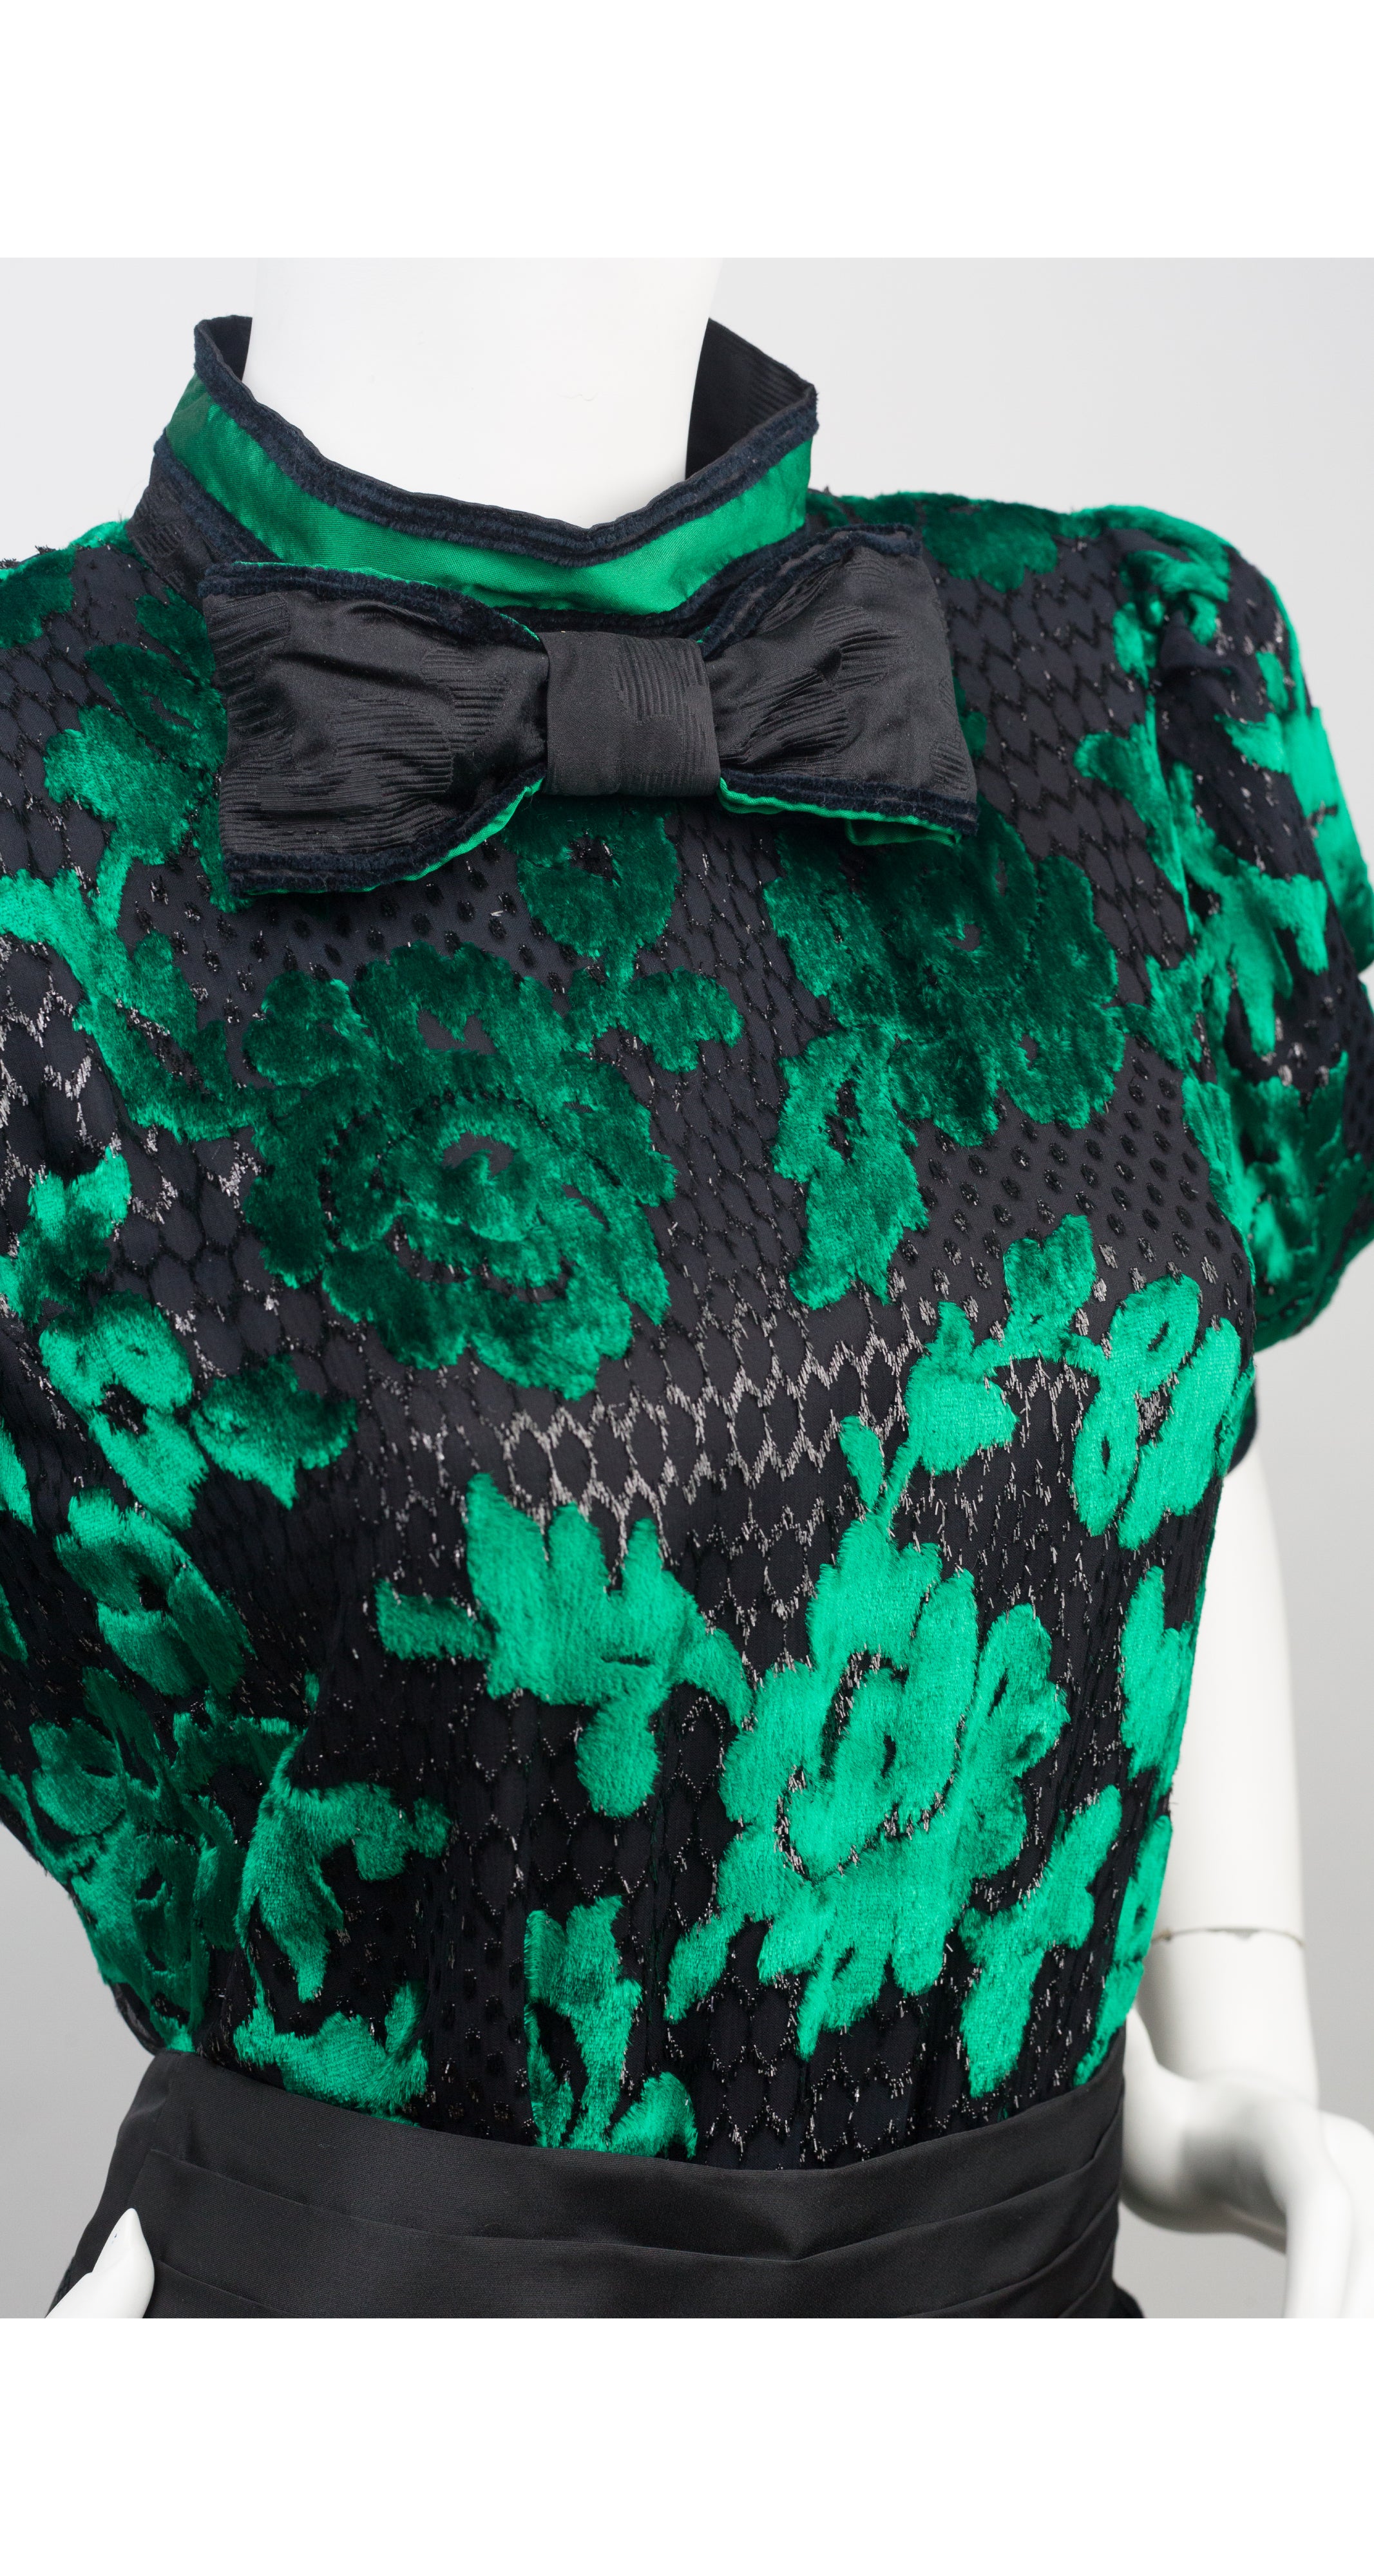 1980s Green & Black Silk Devore Gown